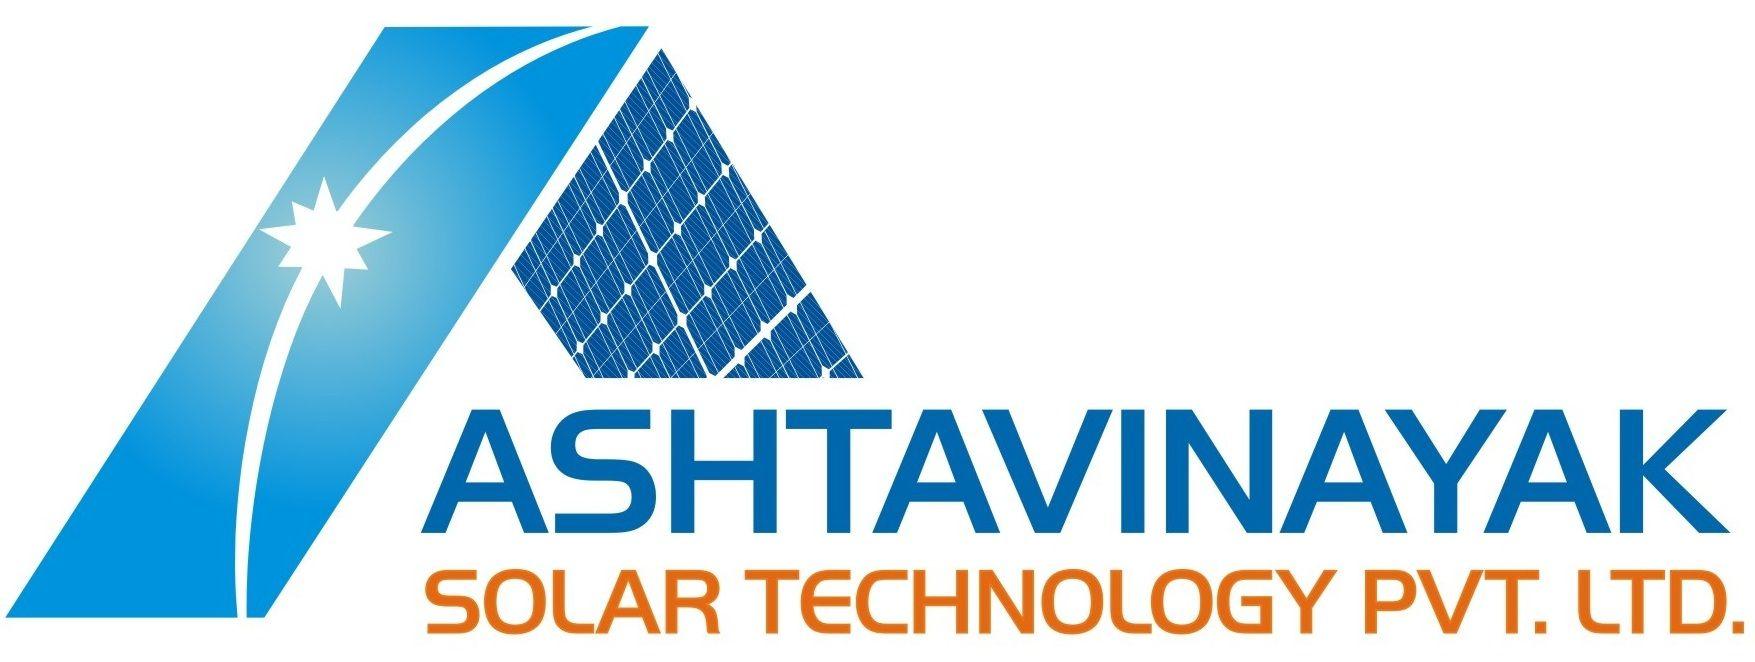 Photovoltaic Logo - Ashtavinayak Solar Technology Pvt. Ltd